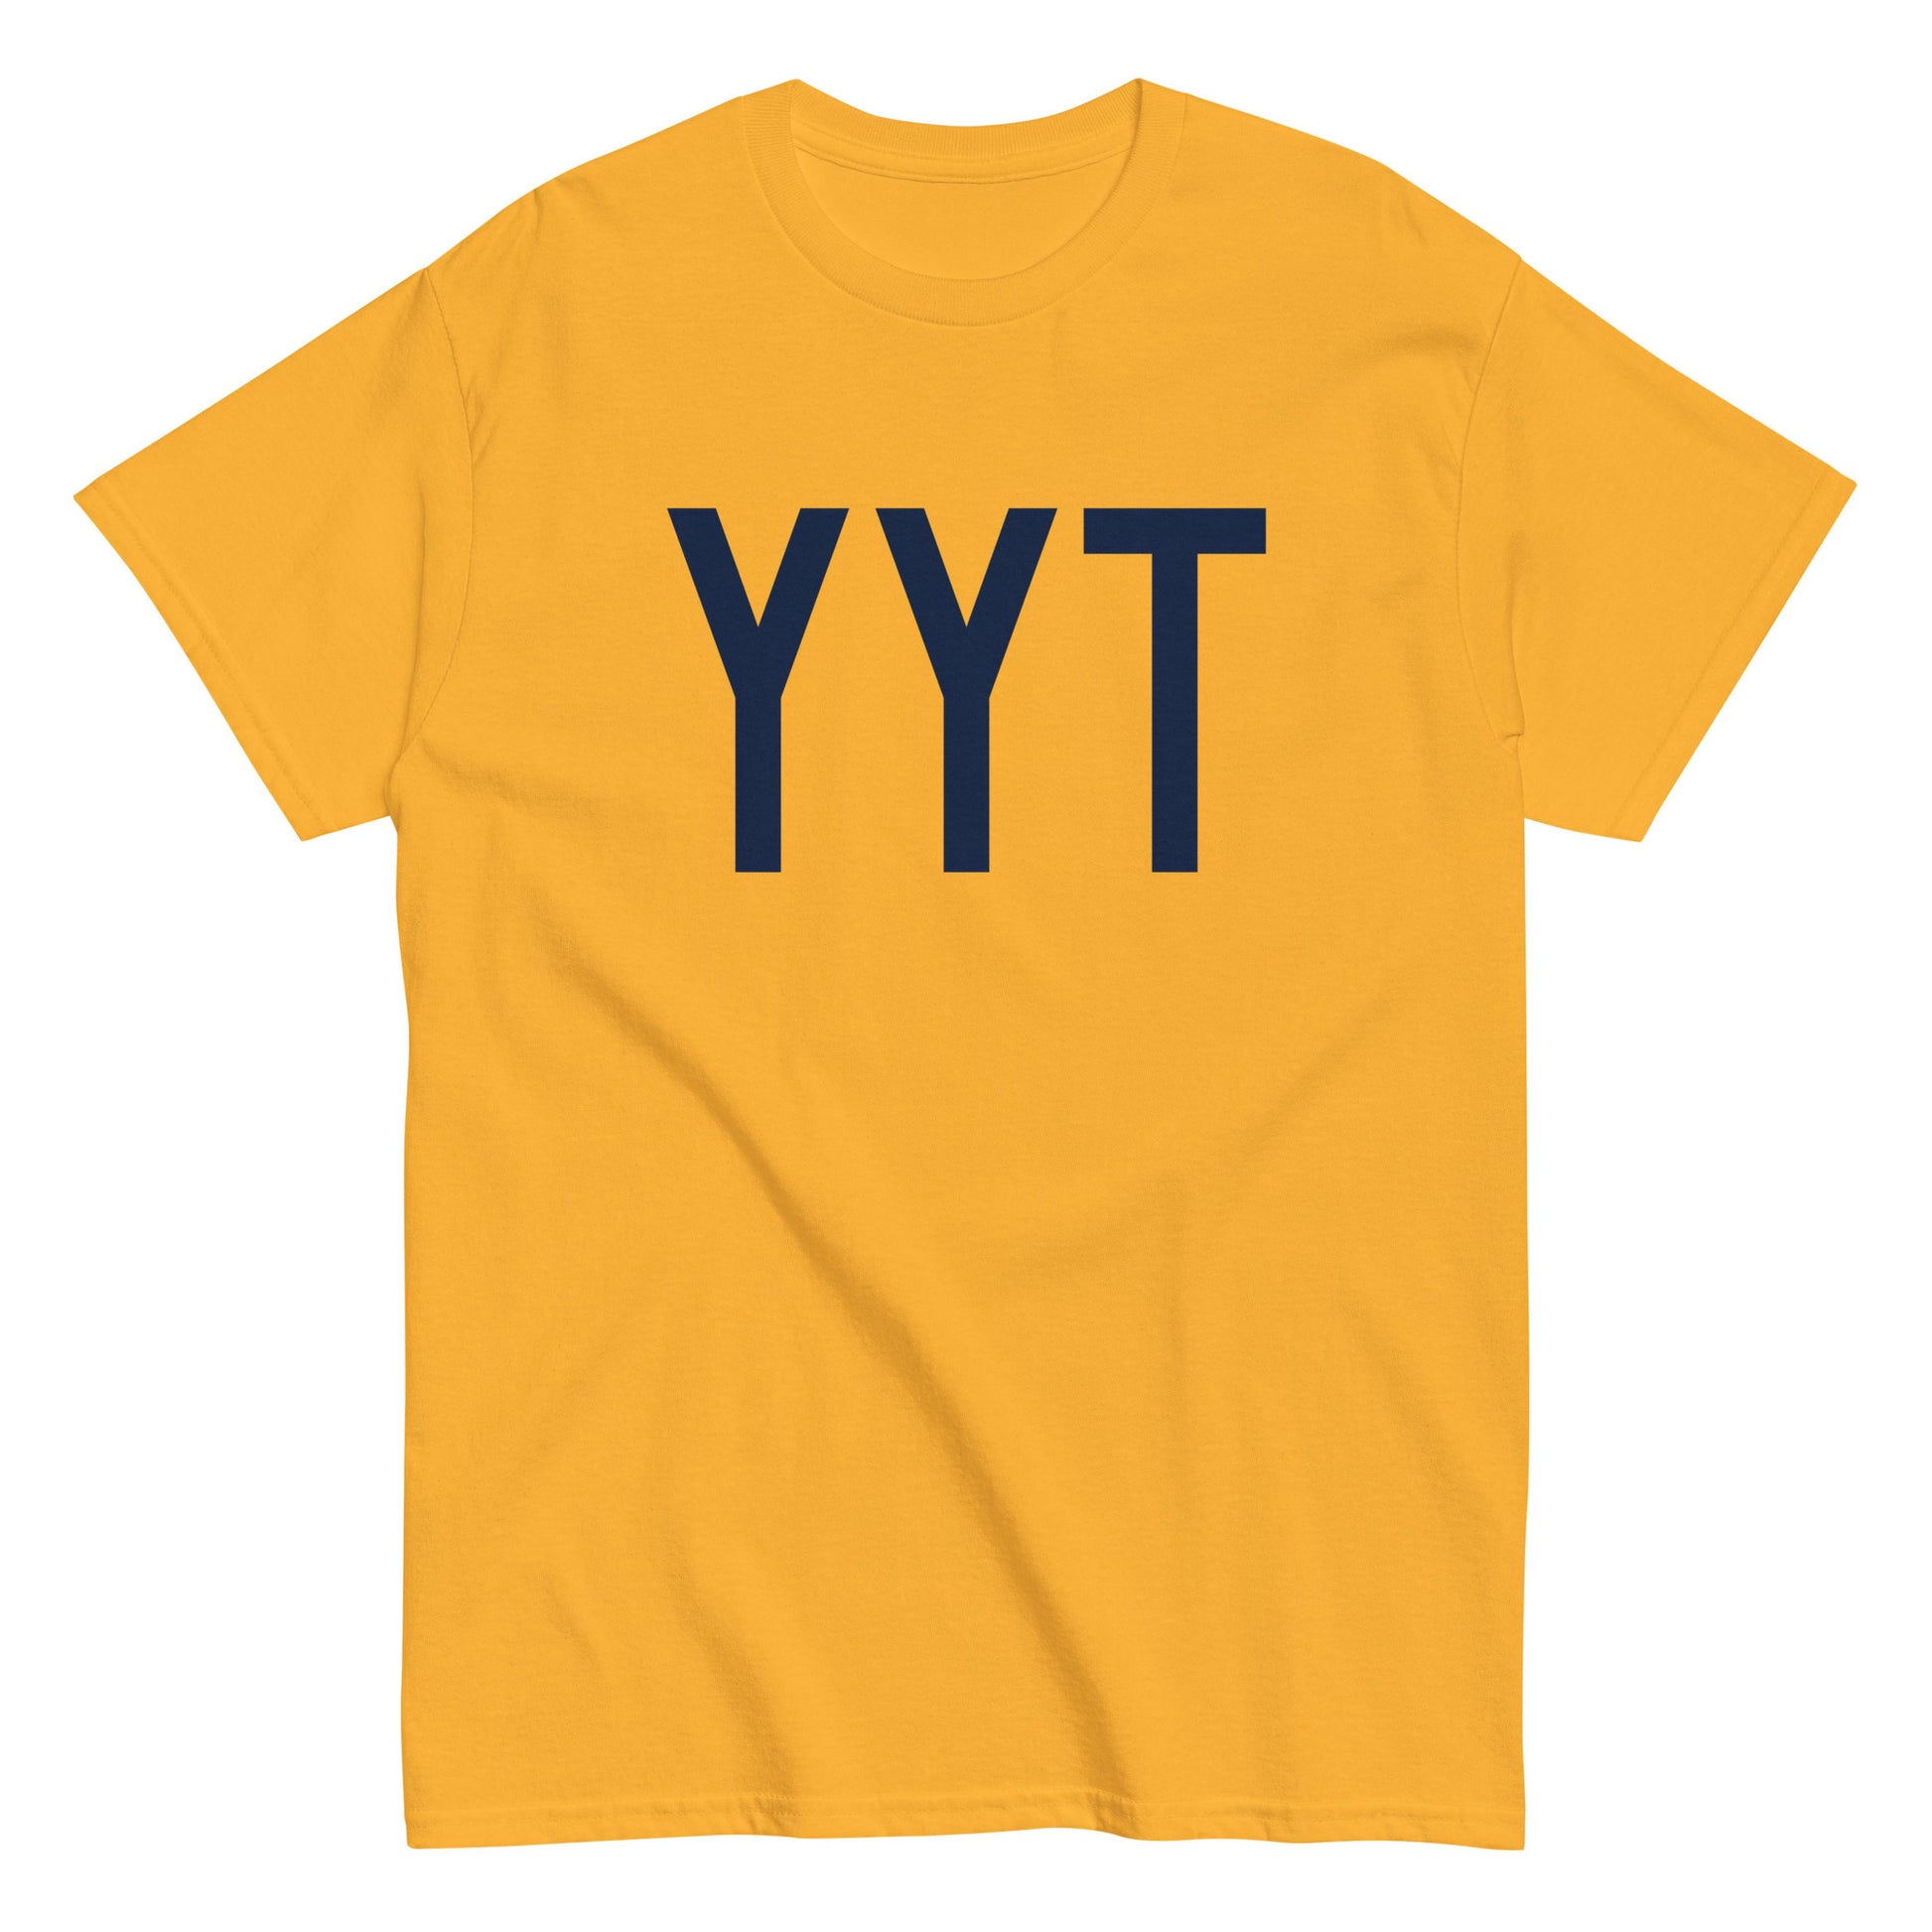 Aviation-Theme Men's T-Shirt - Navy Blue Graphic • YYT St. John's • YHM Designs - Image 01